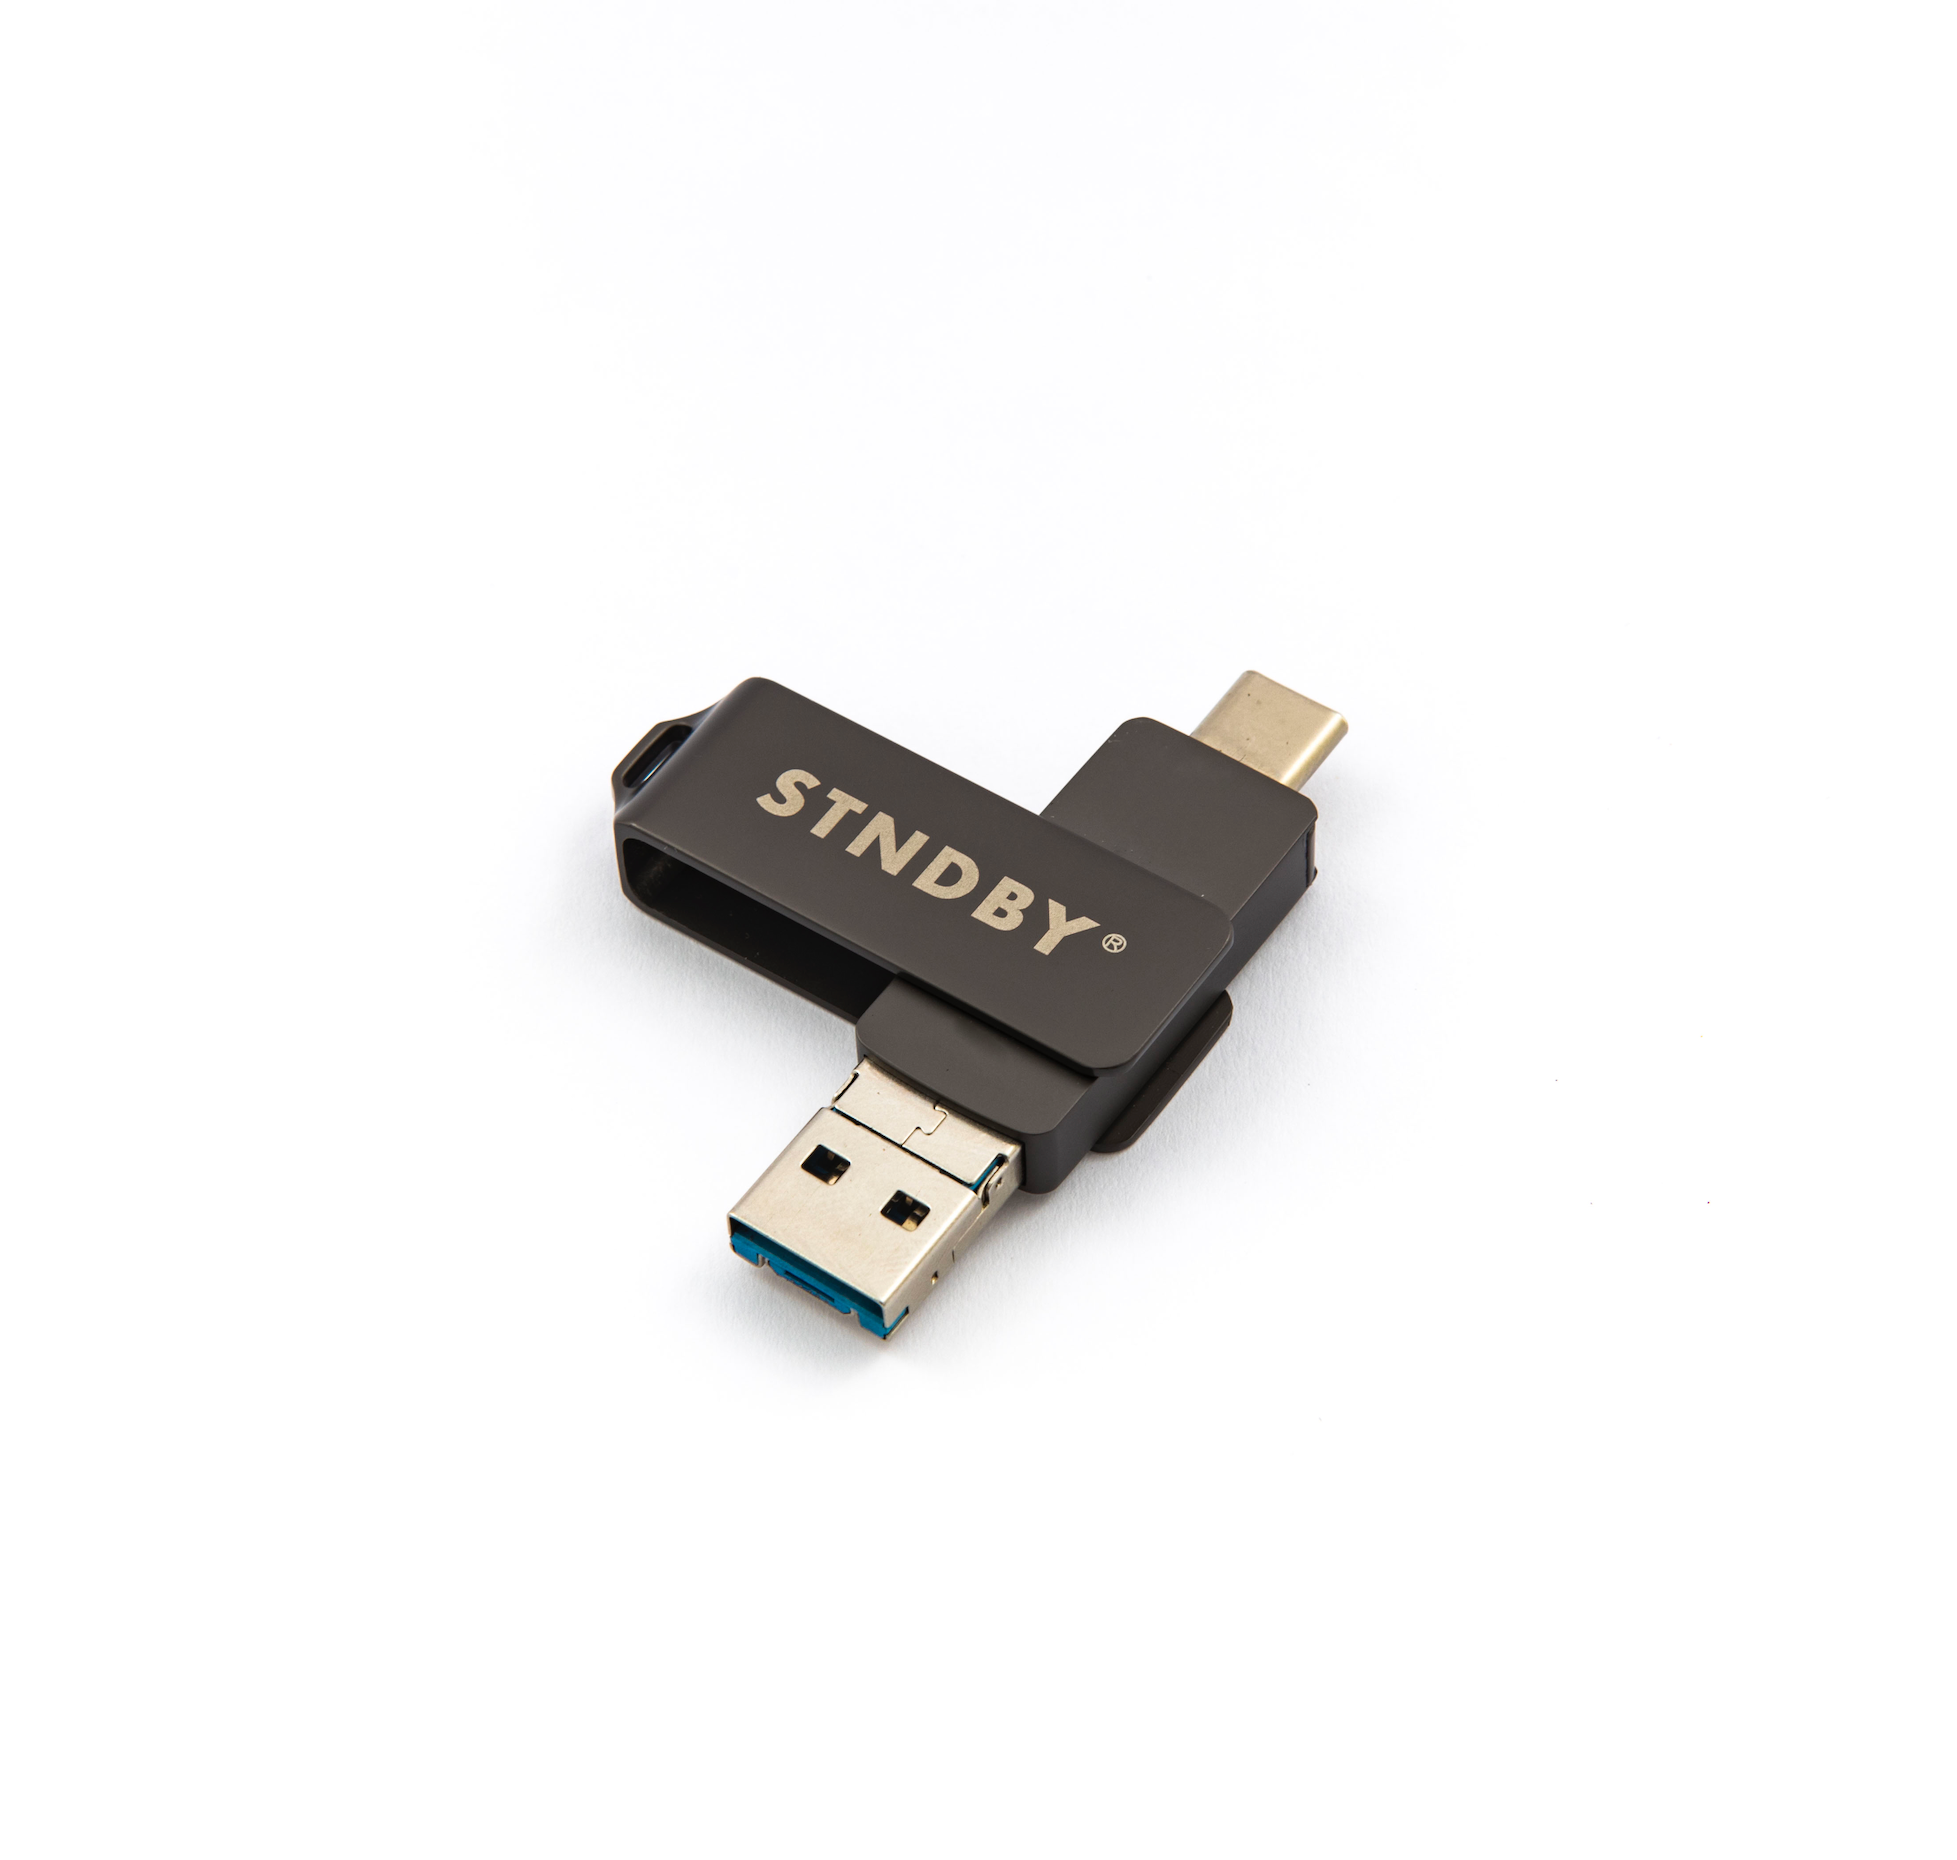 Stereo USB Stick METAL EDITION (128GB)